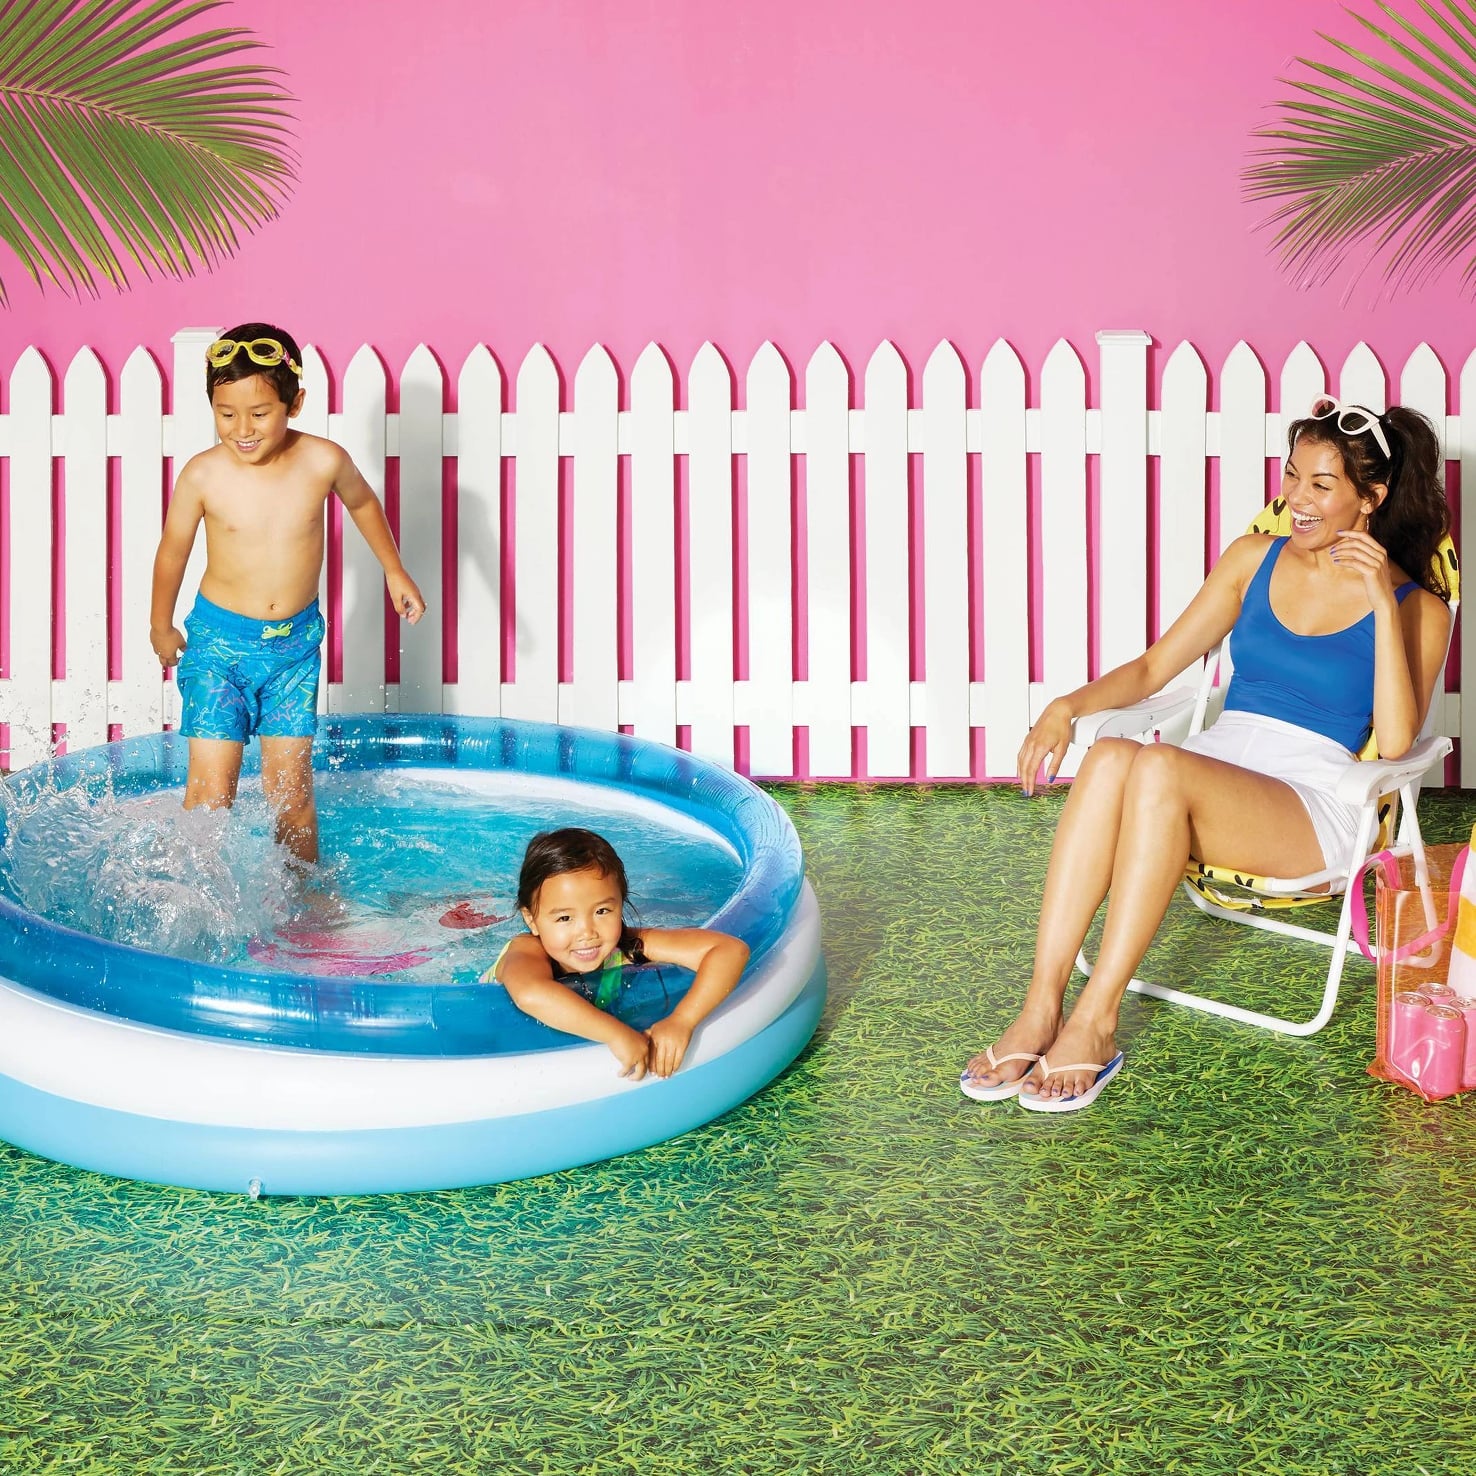 Inflatable Family Swimming Pool Summer Lounge Kids Child Water Play Fun Backyard 